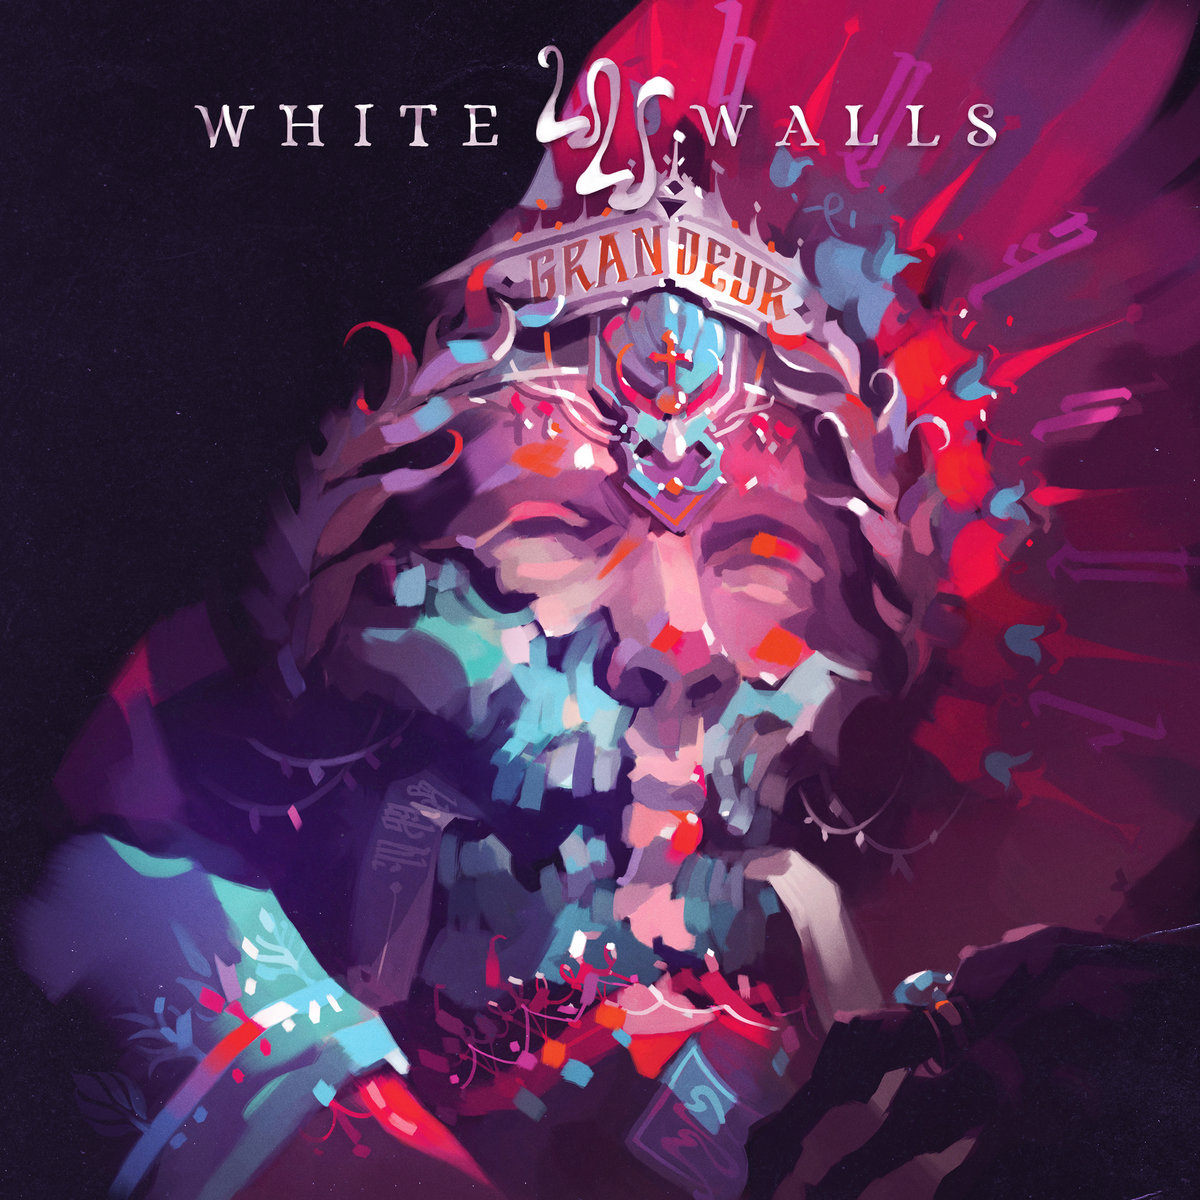 WHITE WALLS - Grandeur cover 